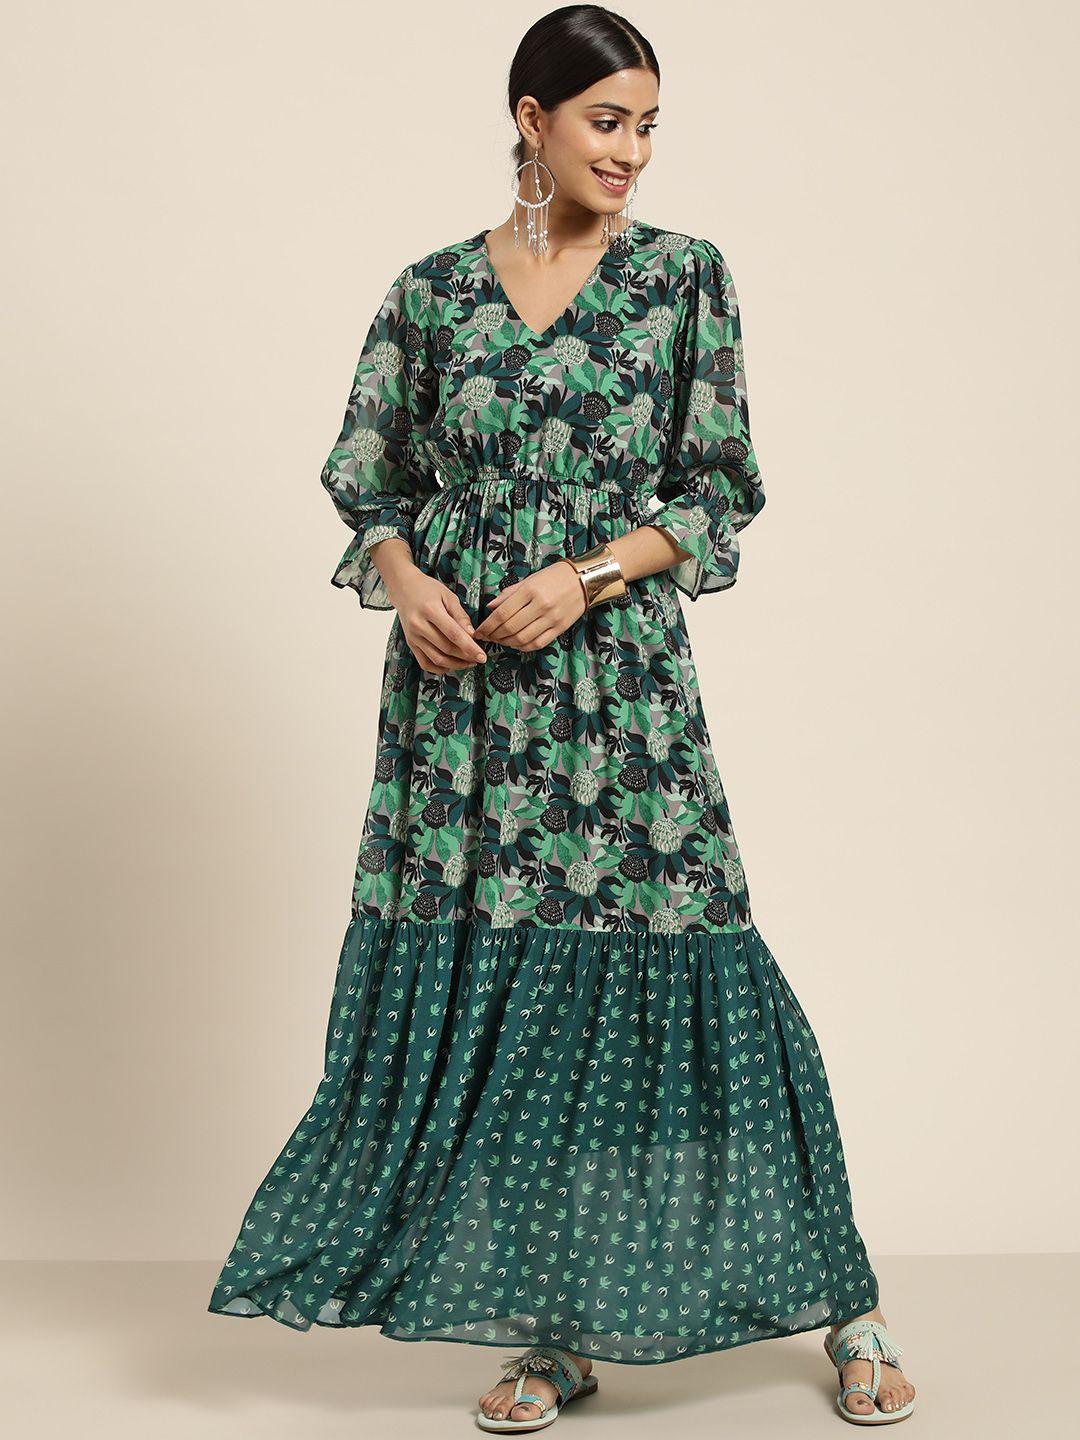 sangria women green & black floral printed ethnic maxi dress